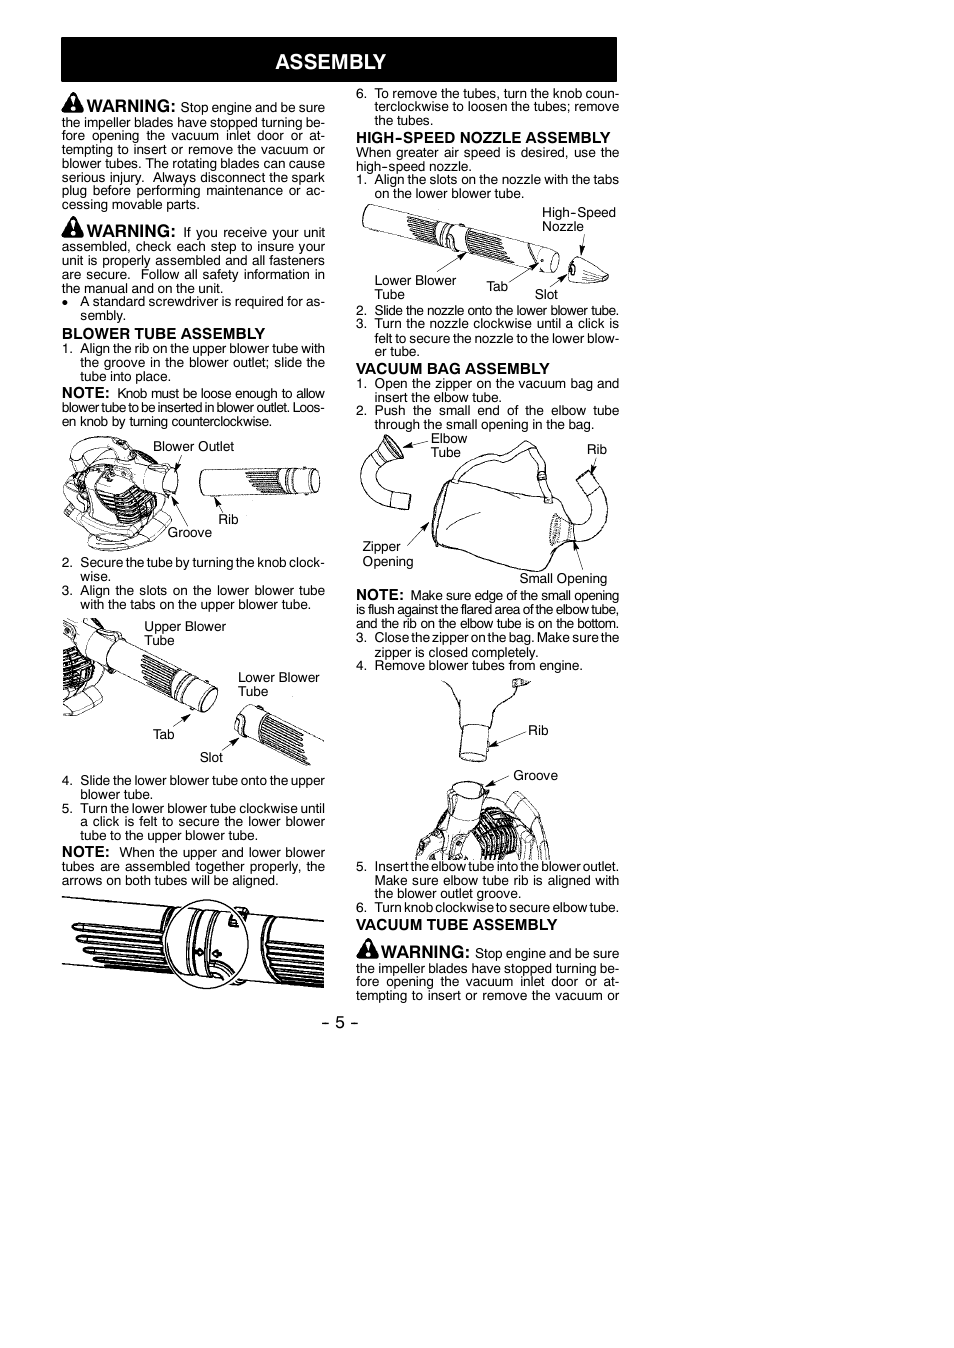 Assembly, Warning | Poulan Pro BVM200VS User Manual | Page 5 / 14